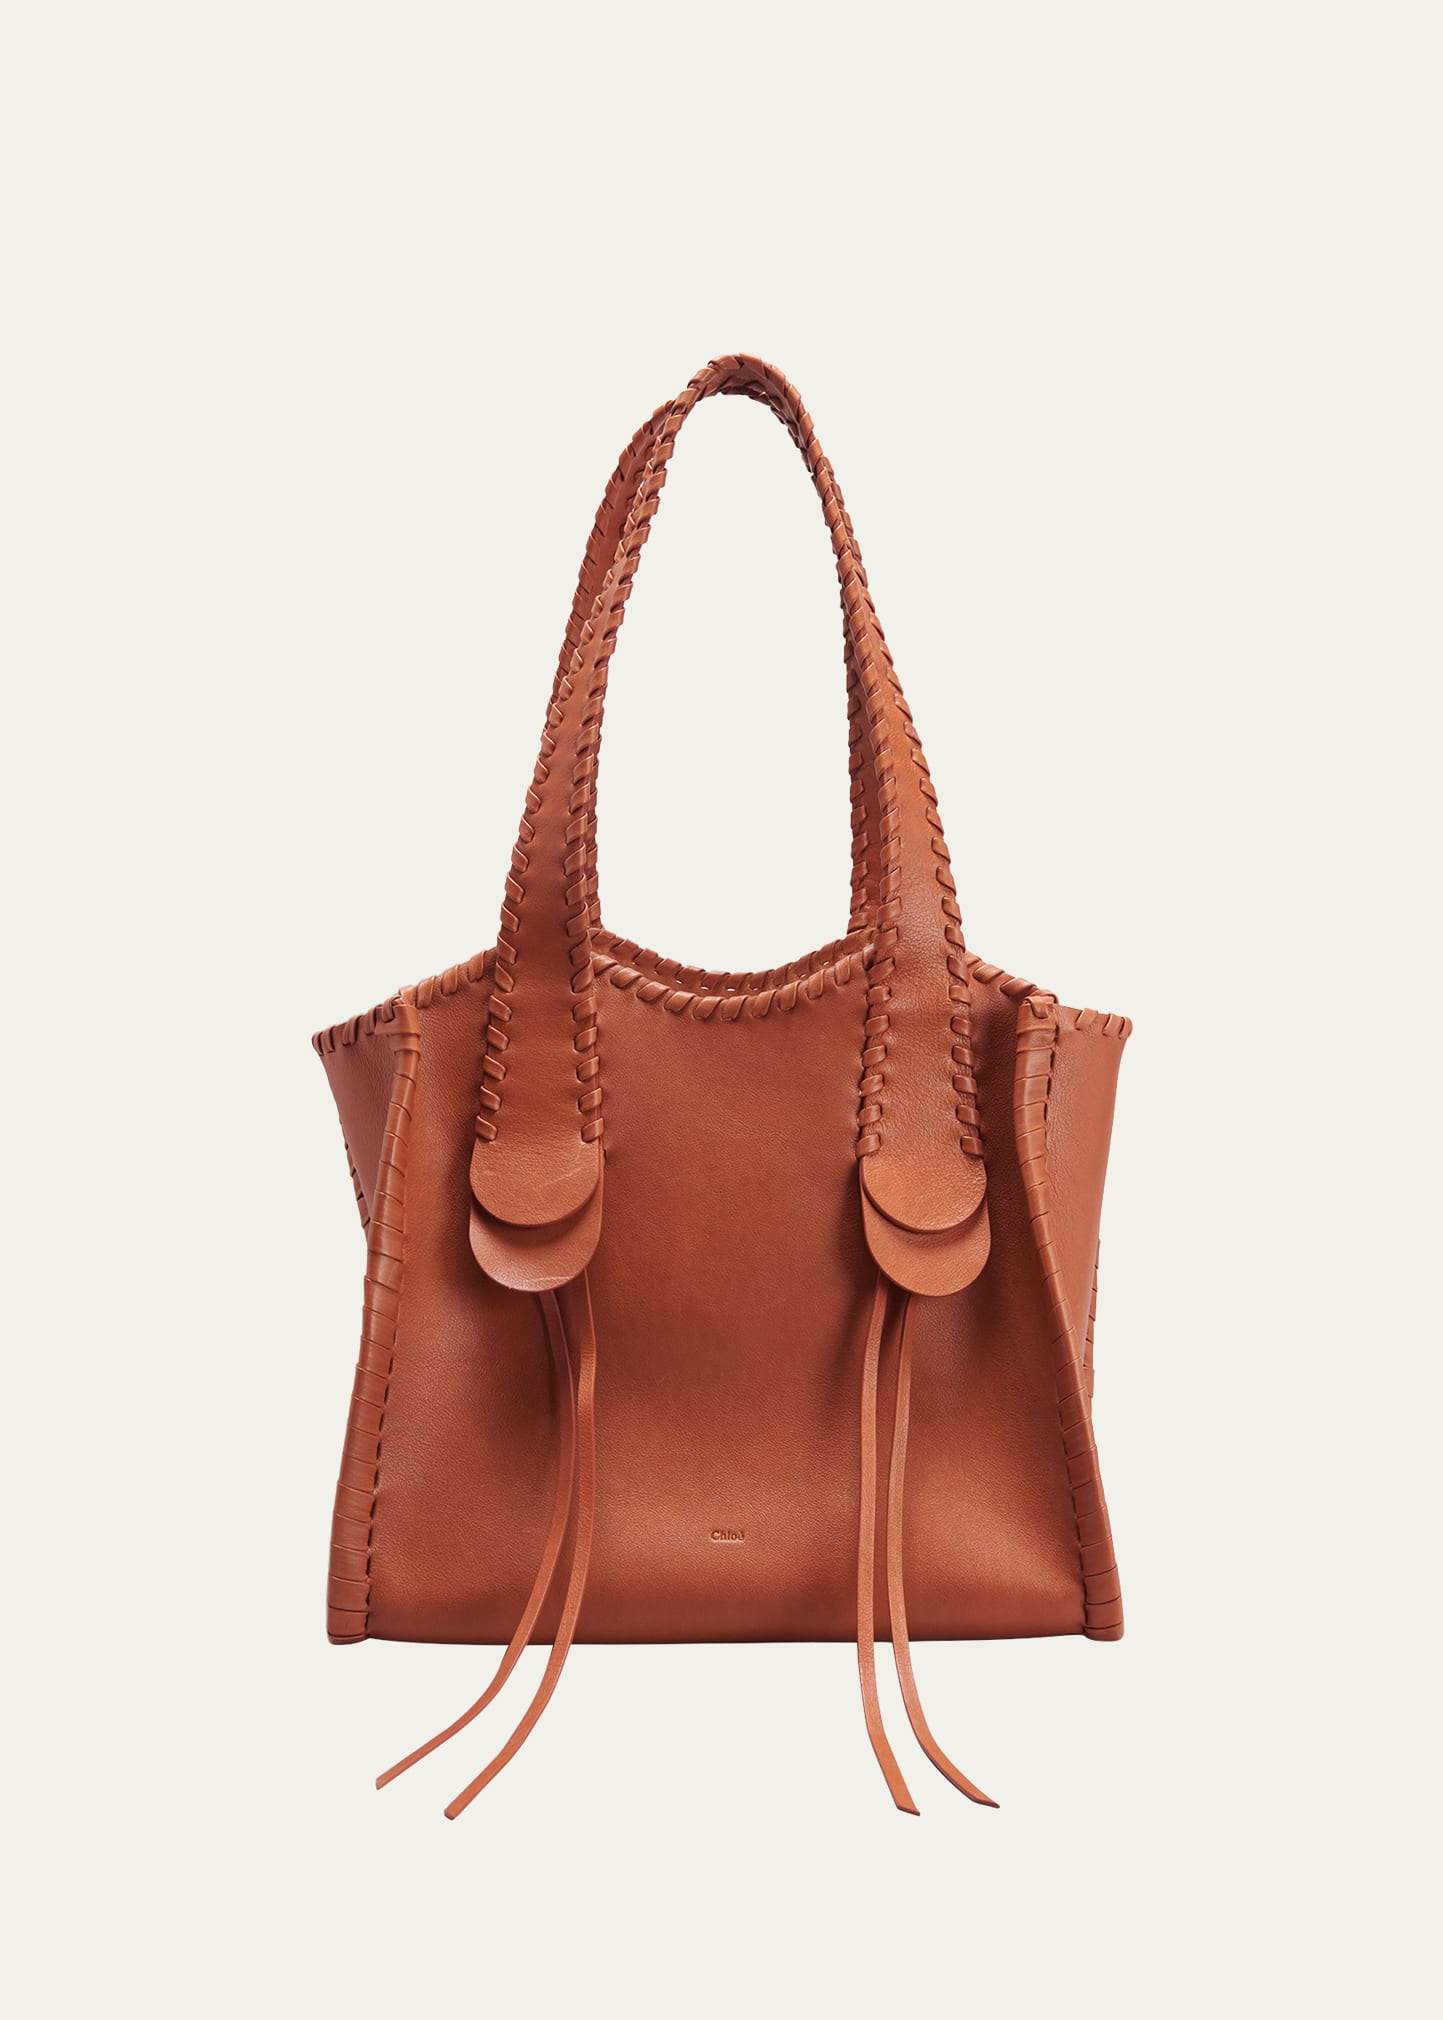 Chloé Orange Mony Medium Leather Tote Bag